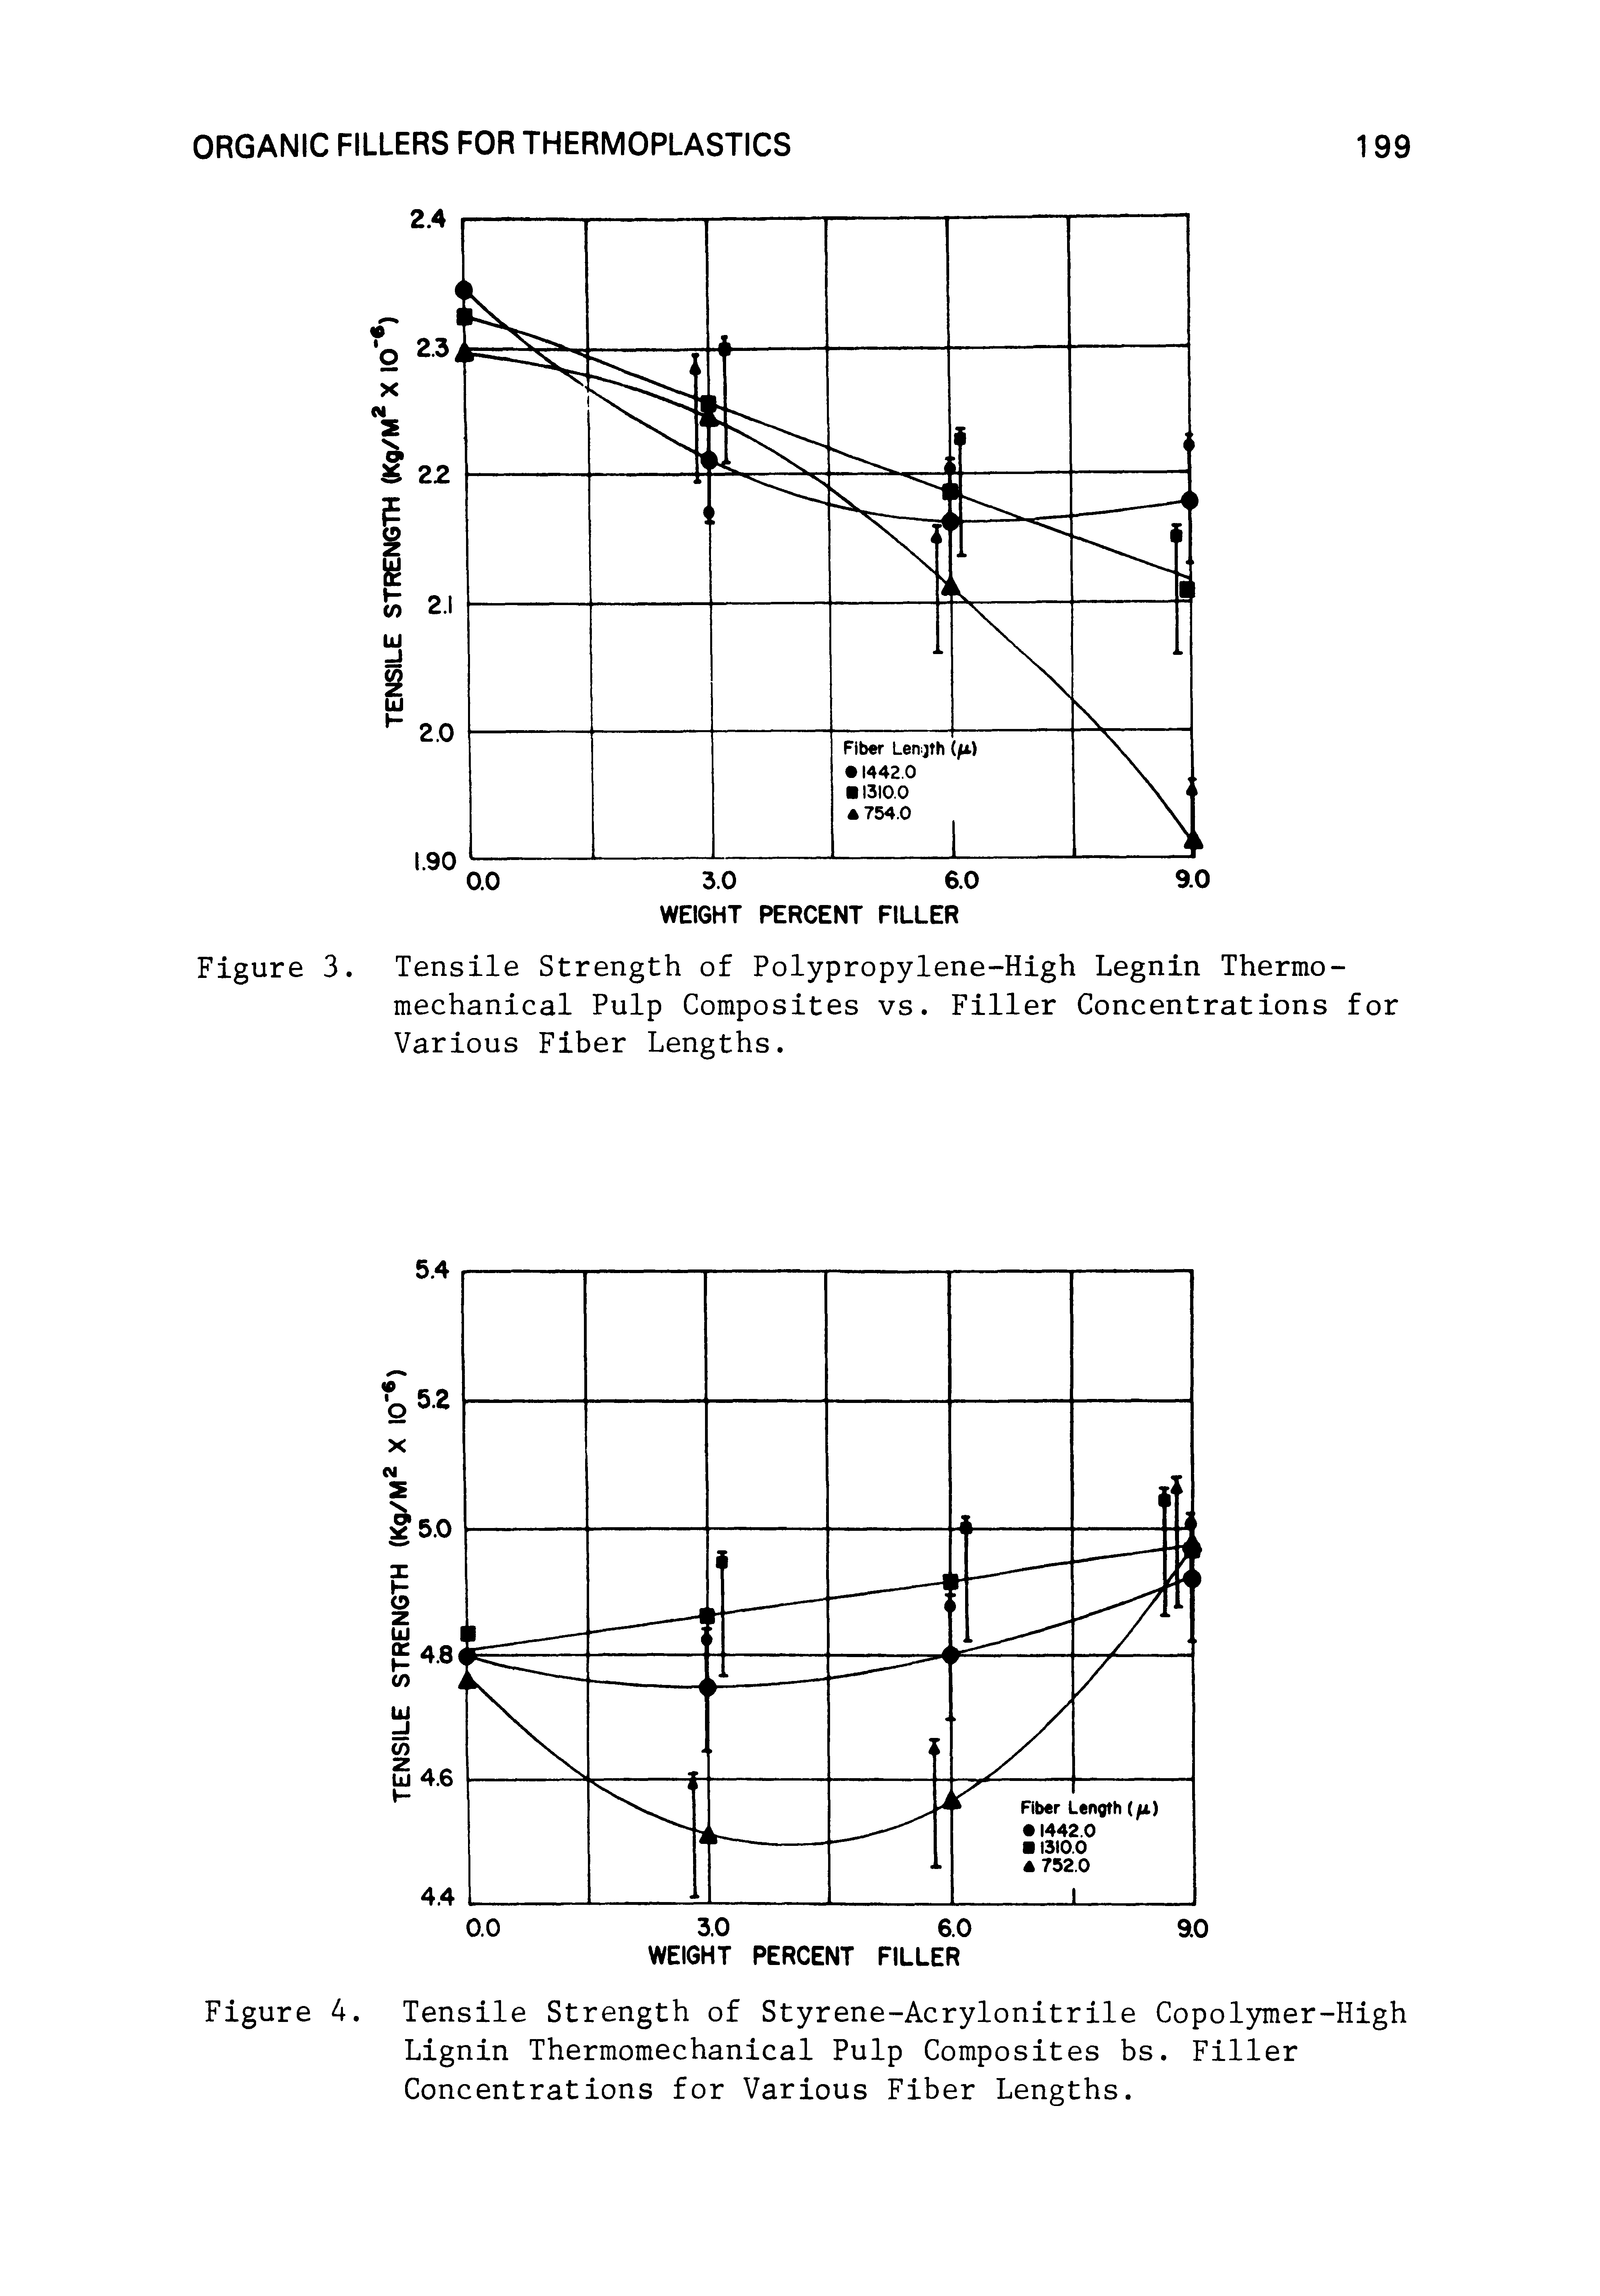 Figure 3. Tensile Strength of Polypropylene-High Legnin Thermomechanical Pulp Composites vs. Filler Concentrations for Various Fiber Lengths.